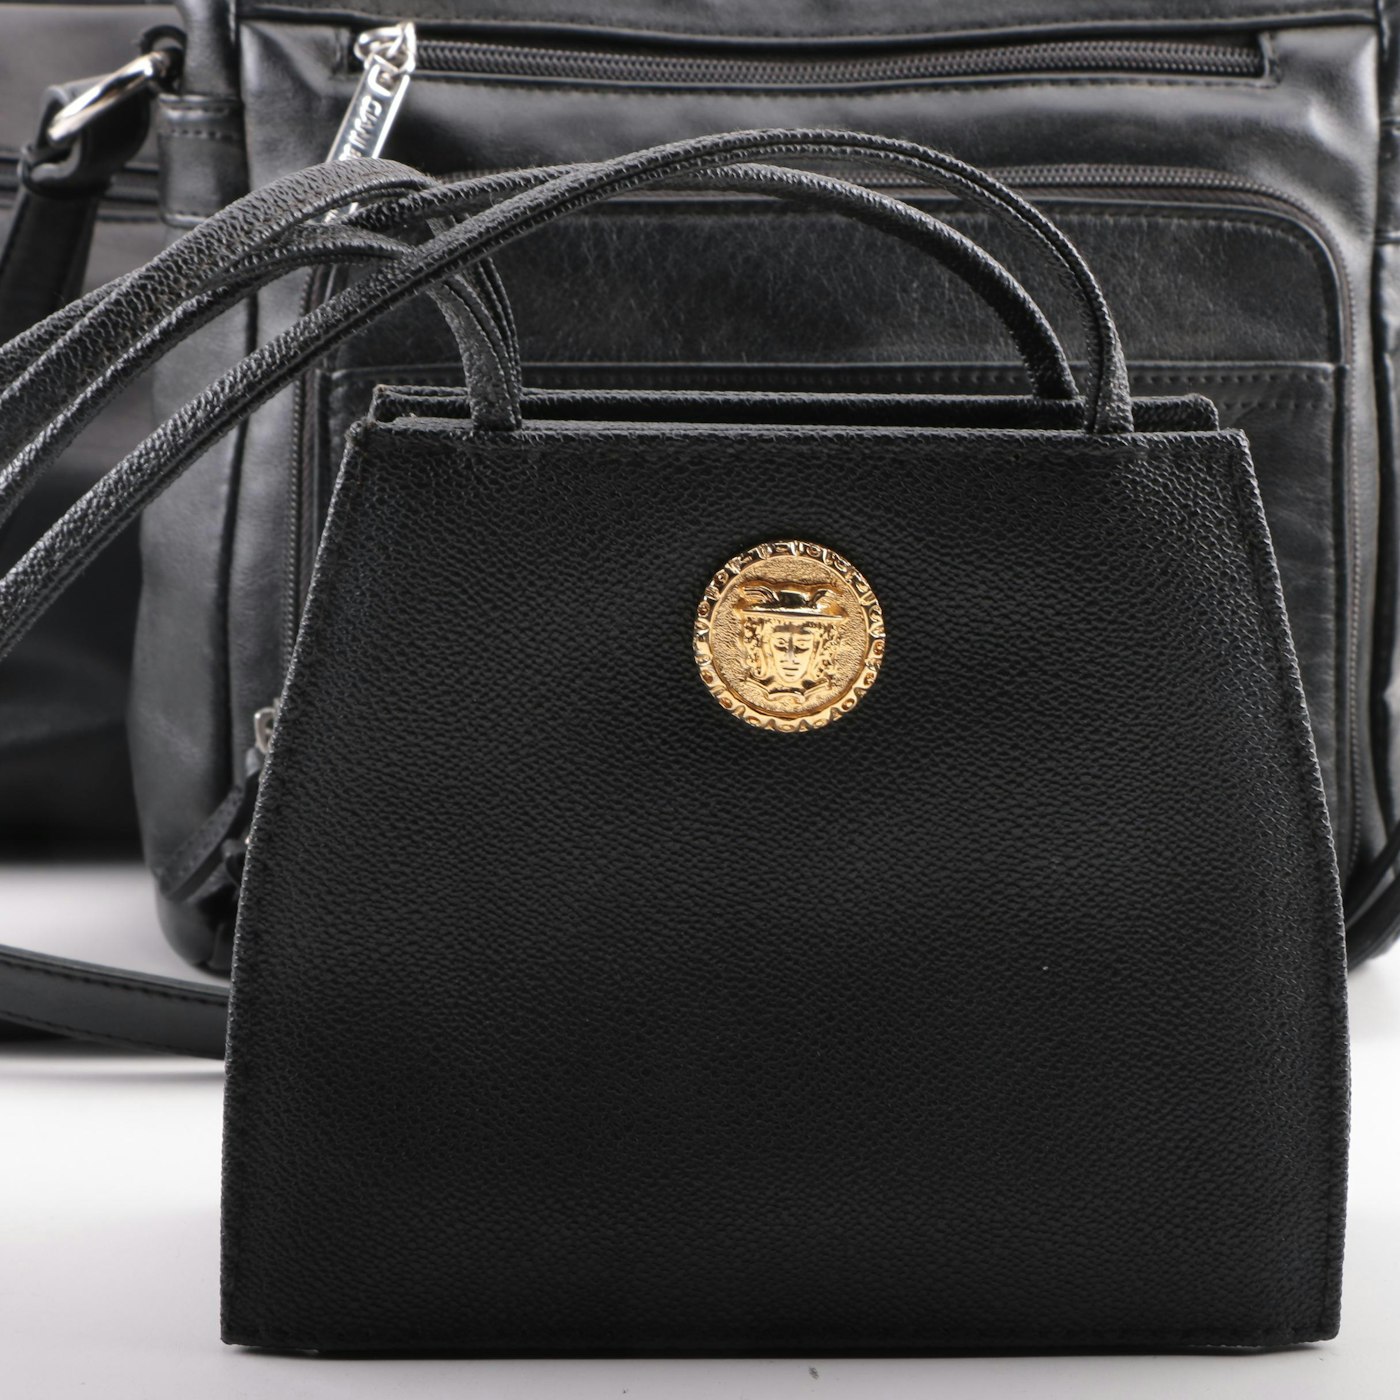 Giani Bernini Black Leather Shoulder Bag with Others | EBTH